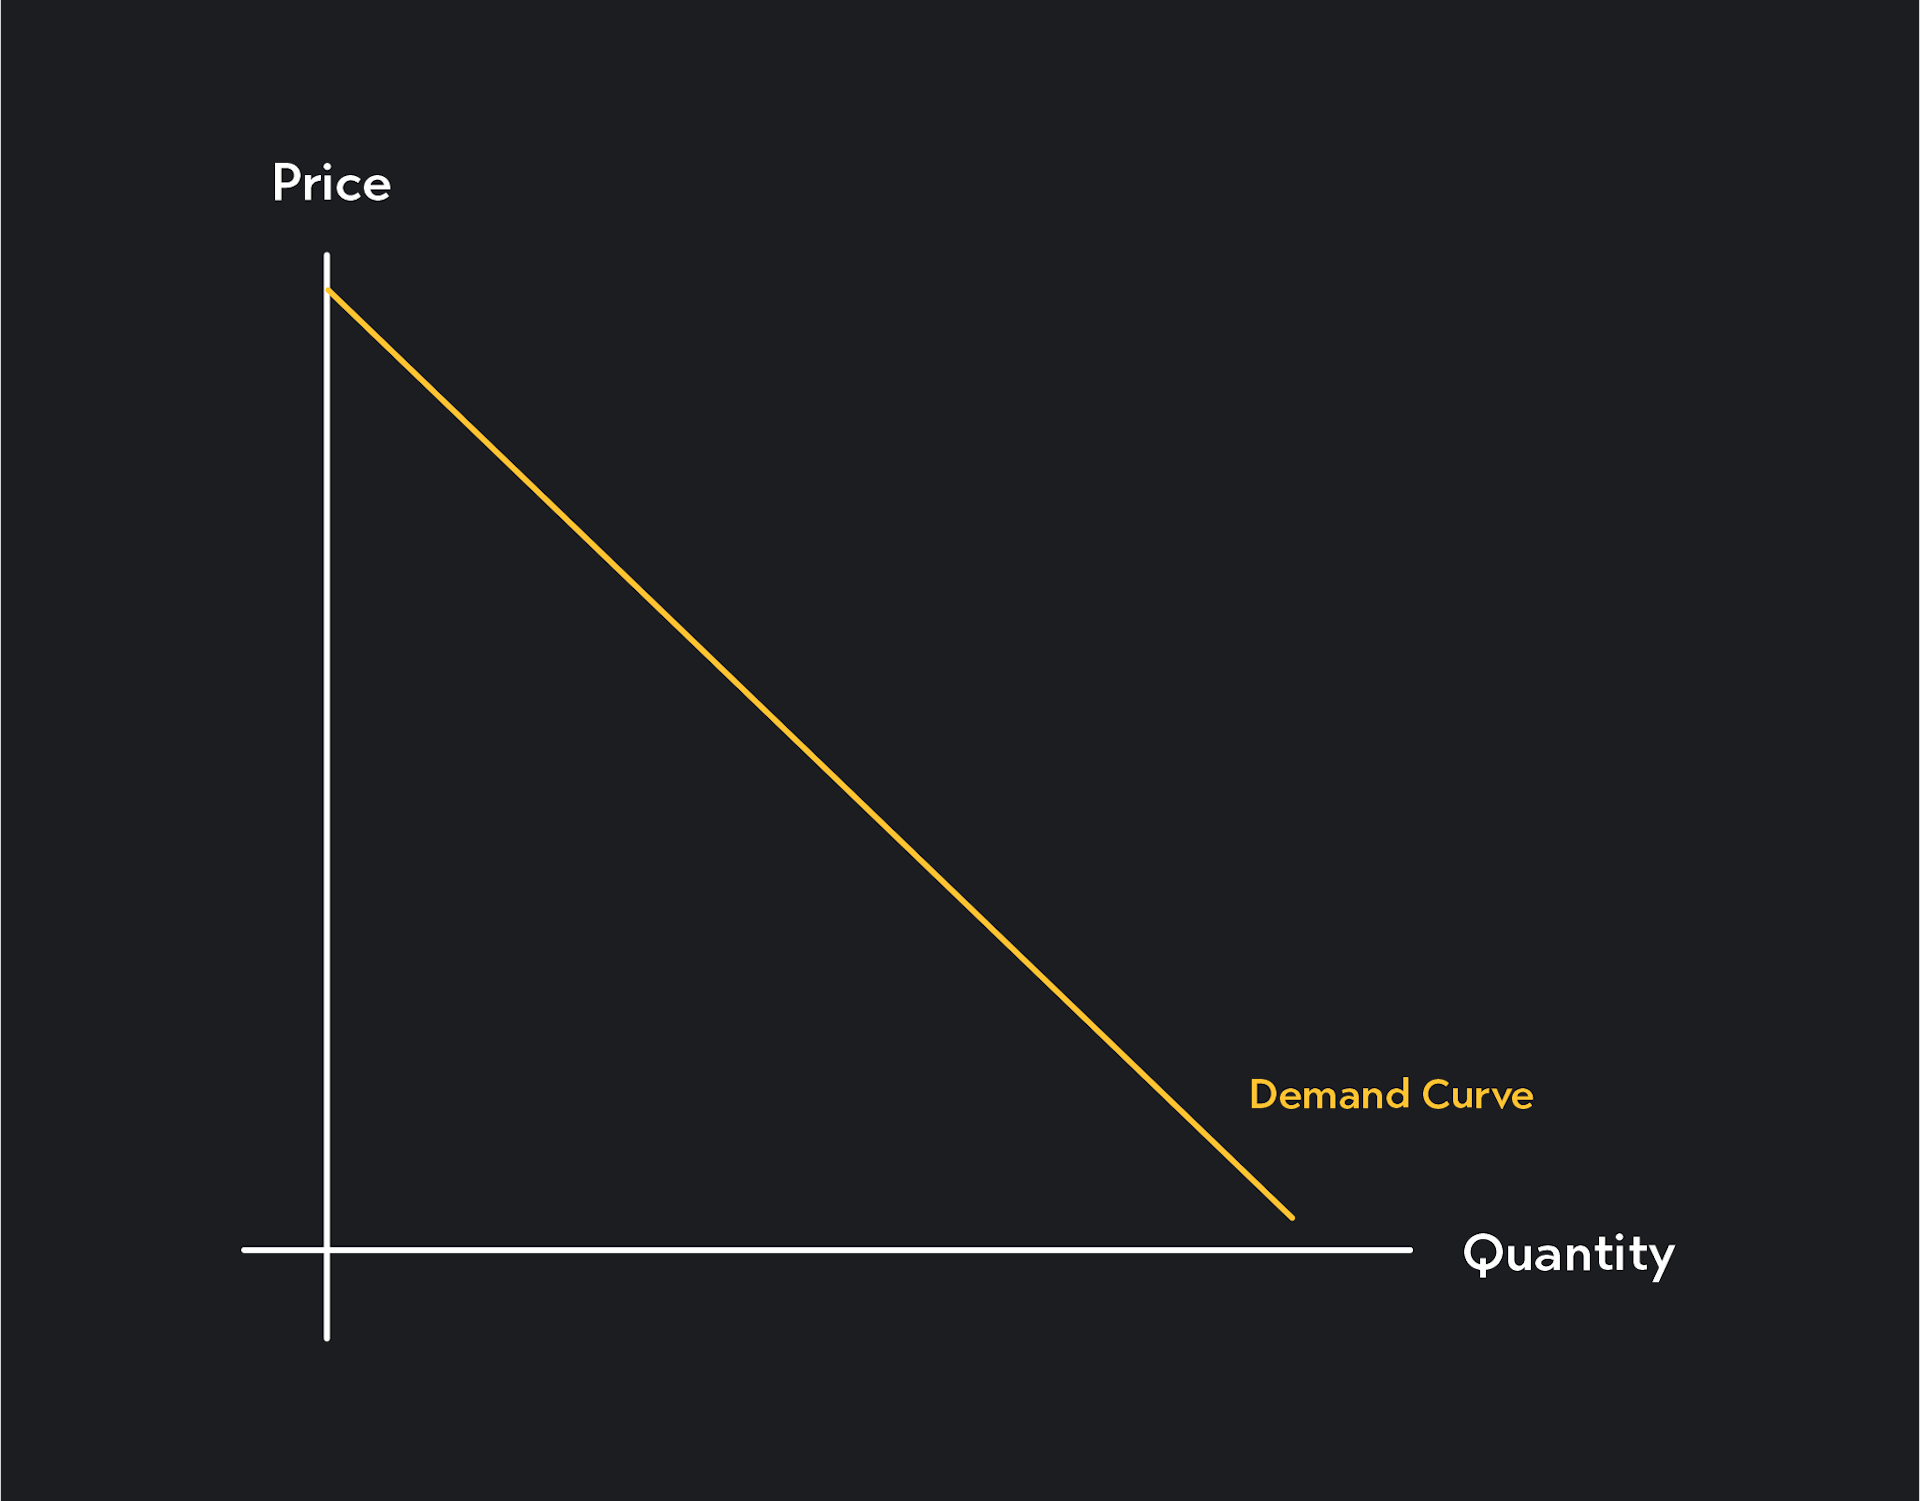 A Demand curve